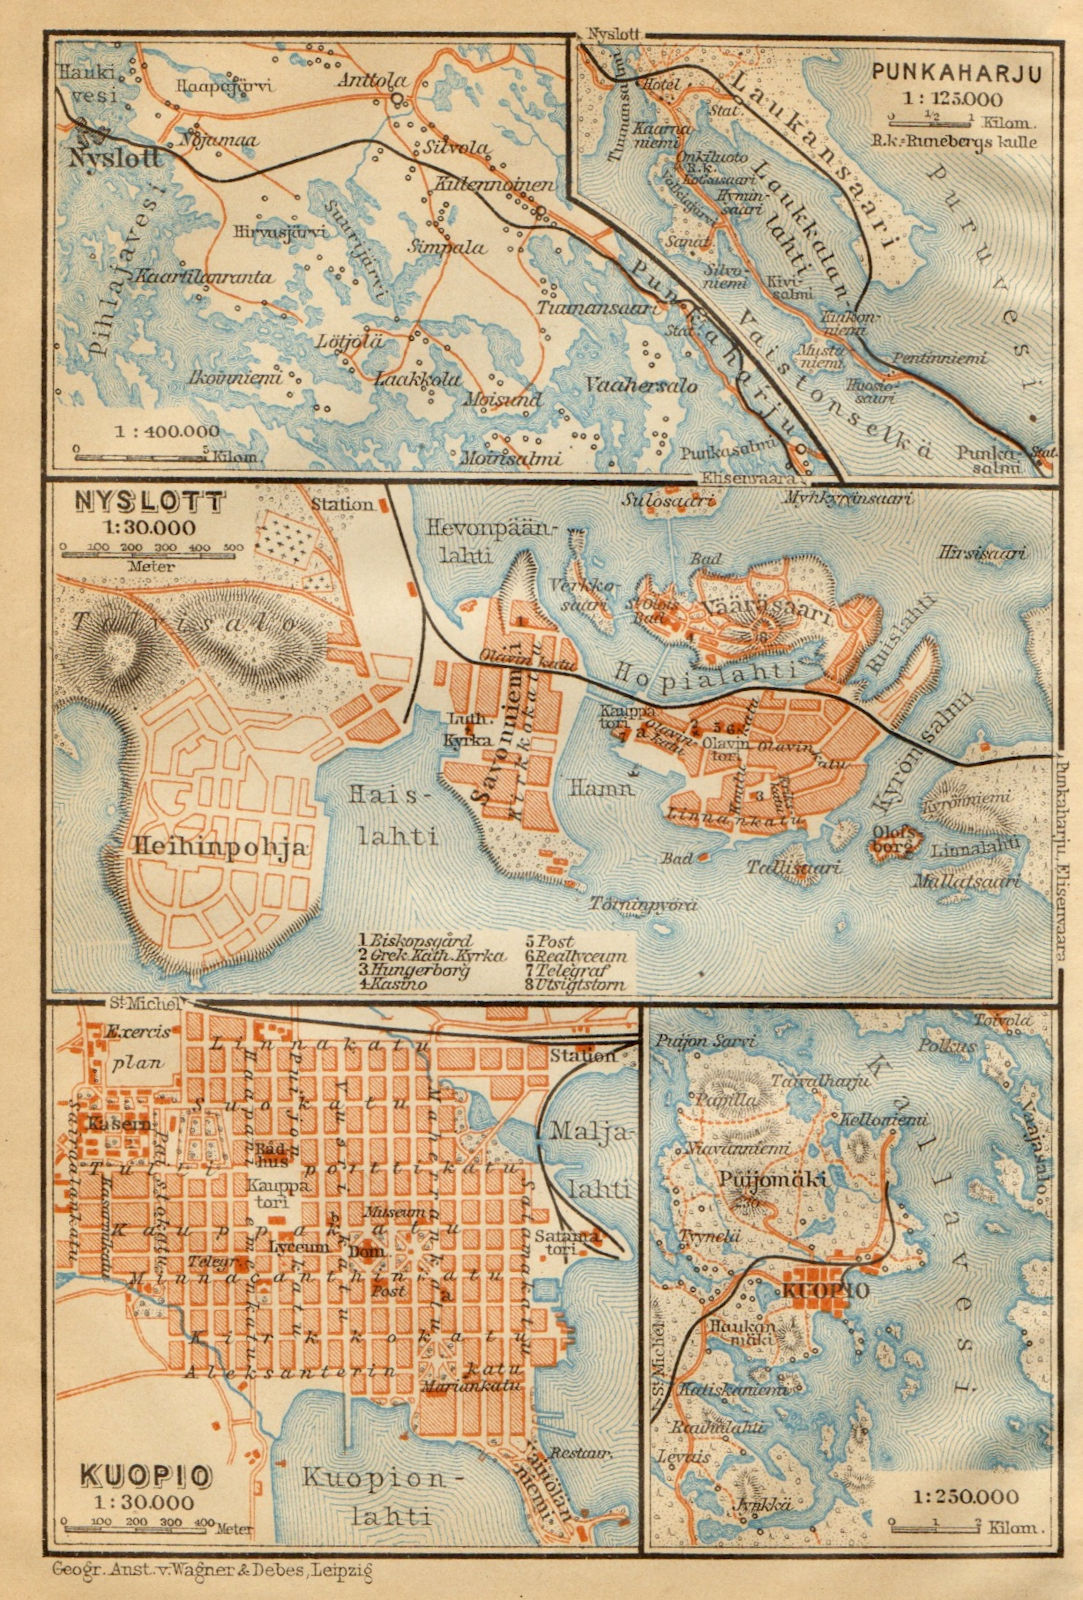 Associate Product Punkaharju. Savonlinna (Nyslott). Kuopio town/city plan kartta. Finland 1912 map